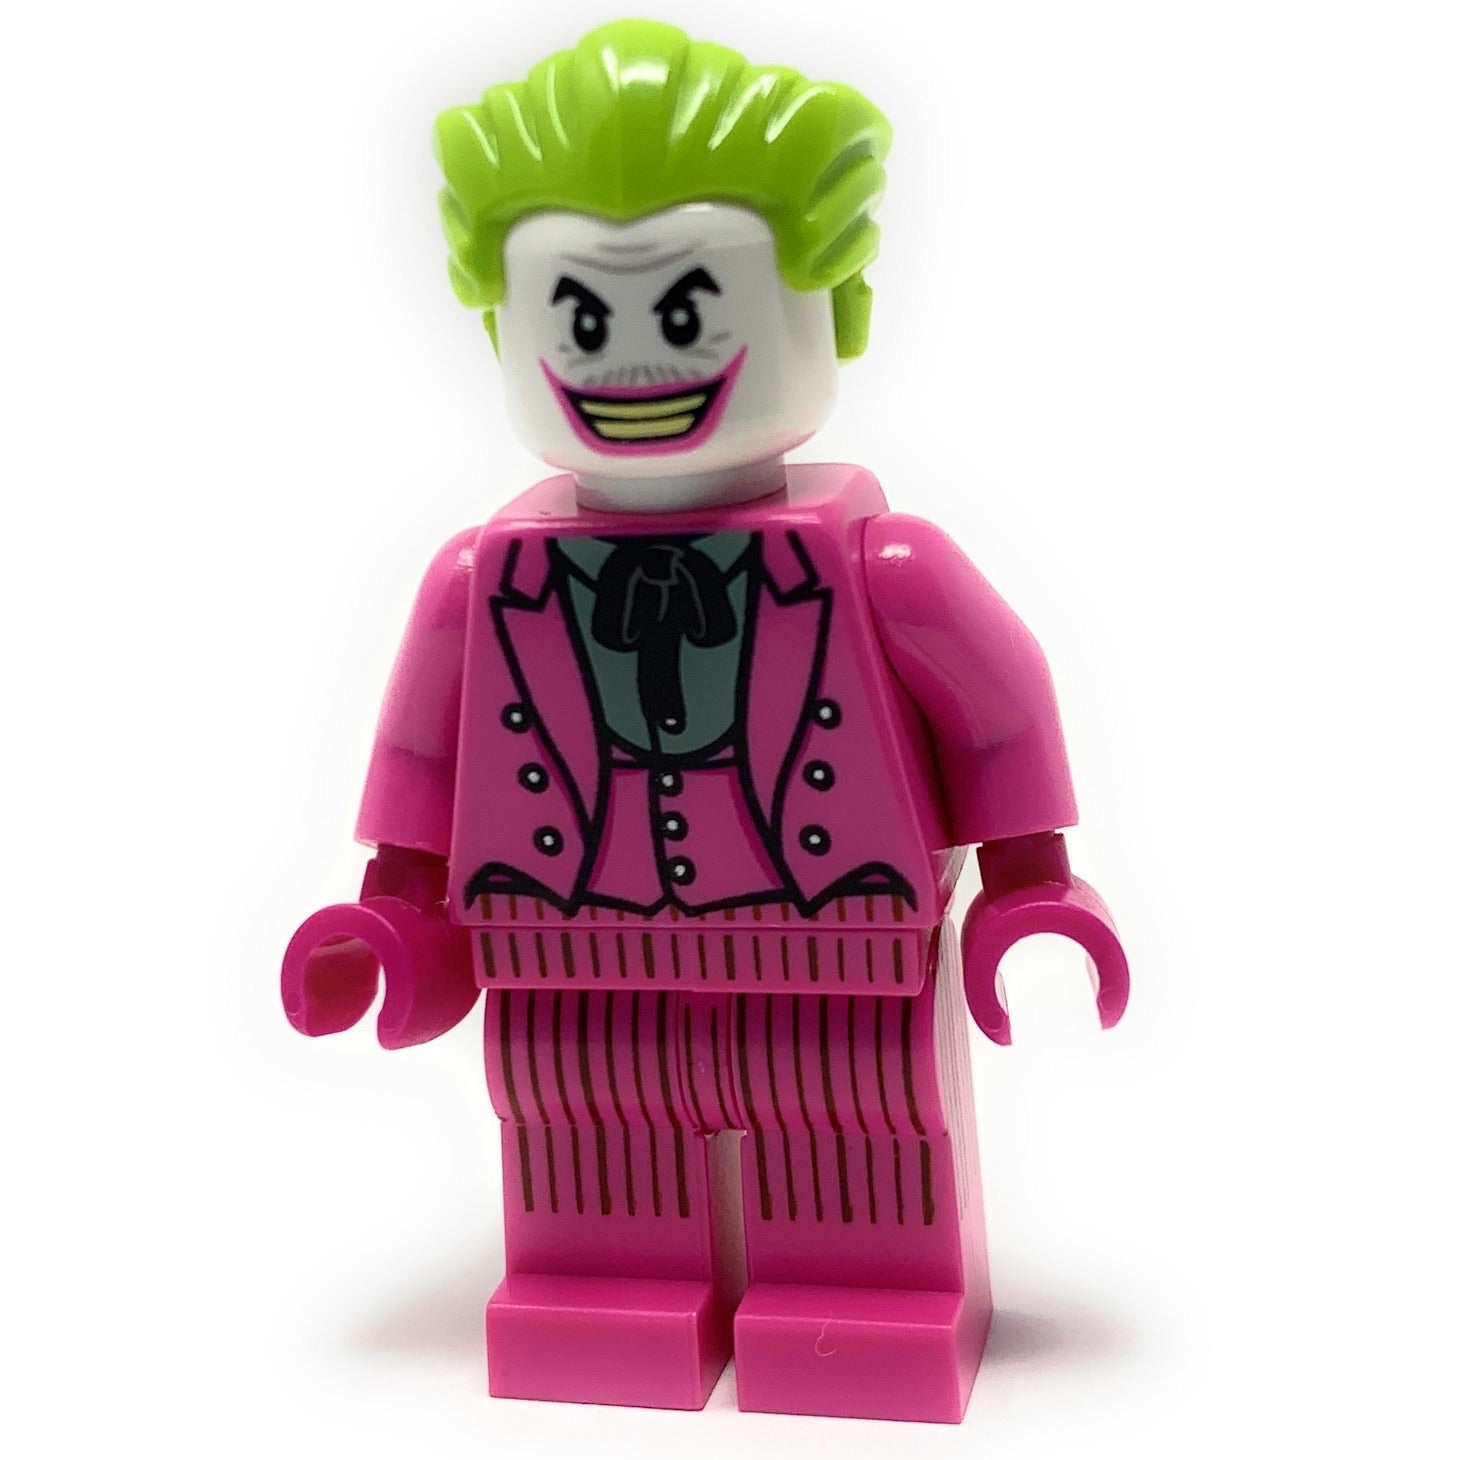 Joker (Classic TV Series) - LEGO DC Comics Minifigure (2016)